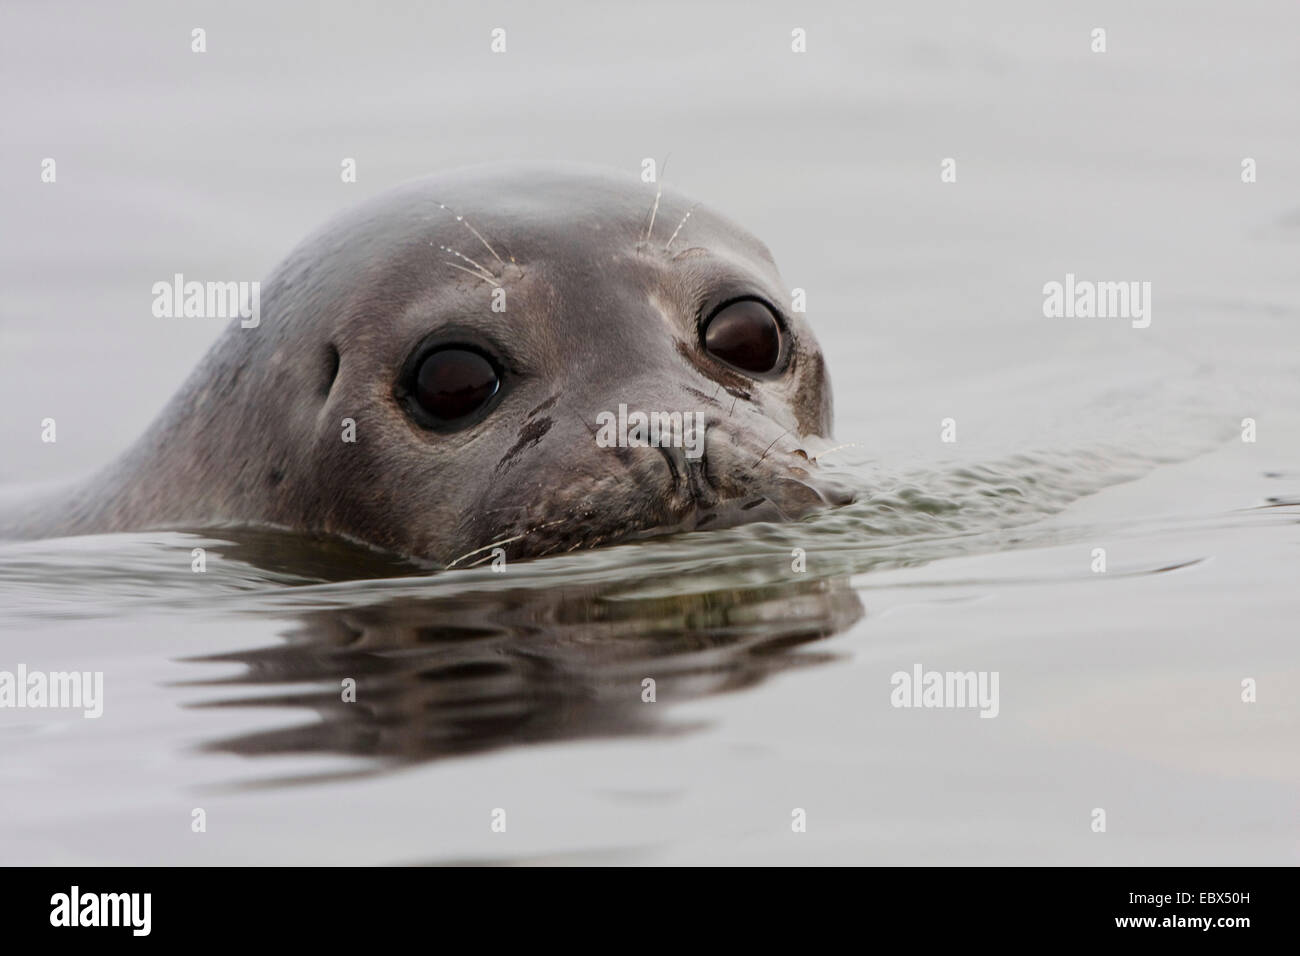 Harbor Seal, Seehunde (Phoca Vitulina), Portrait in Wasser, Norwegen, Spitzbergen, Forlandsundet Fuglehuken Stockfoto